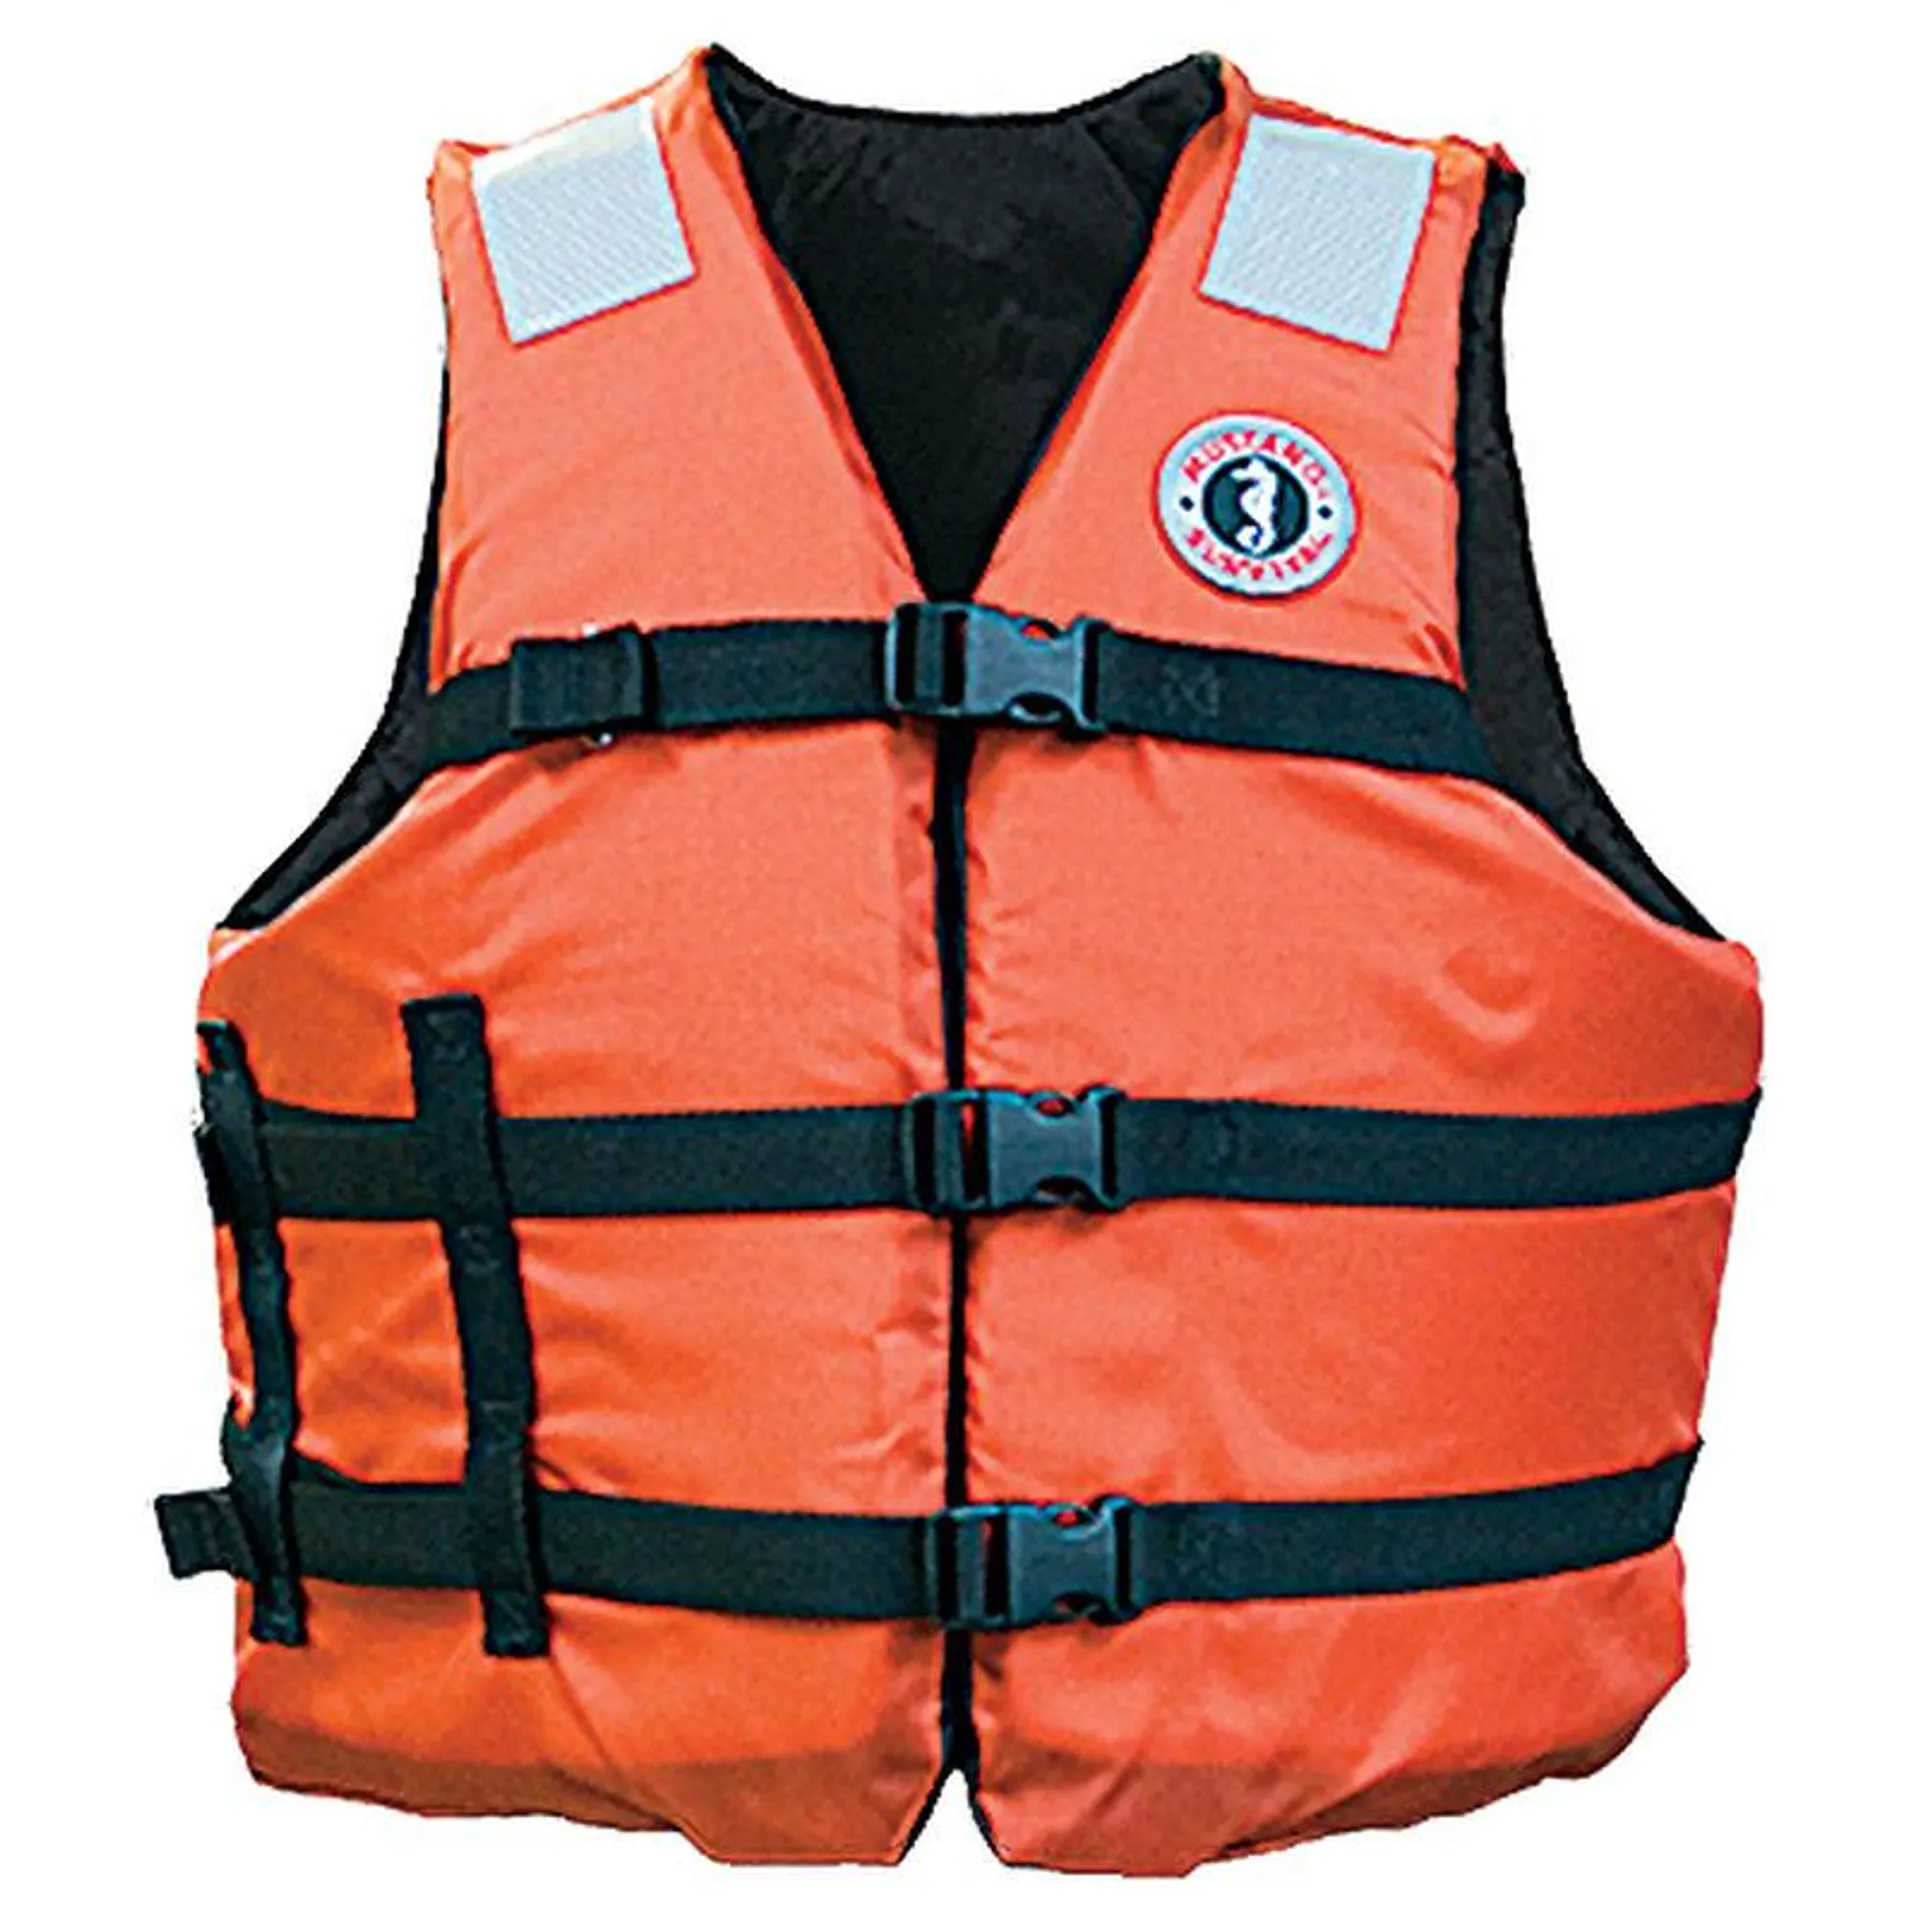 Universal Flotation Life Jacket